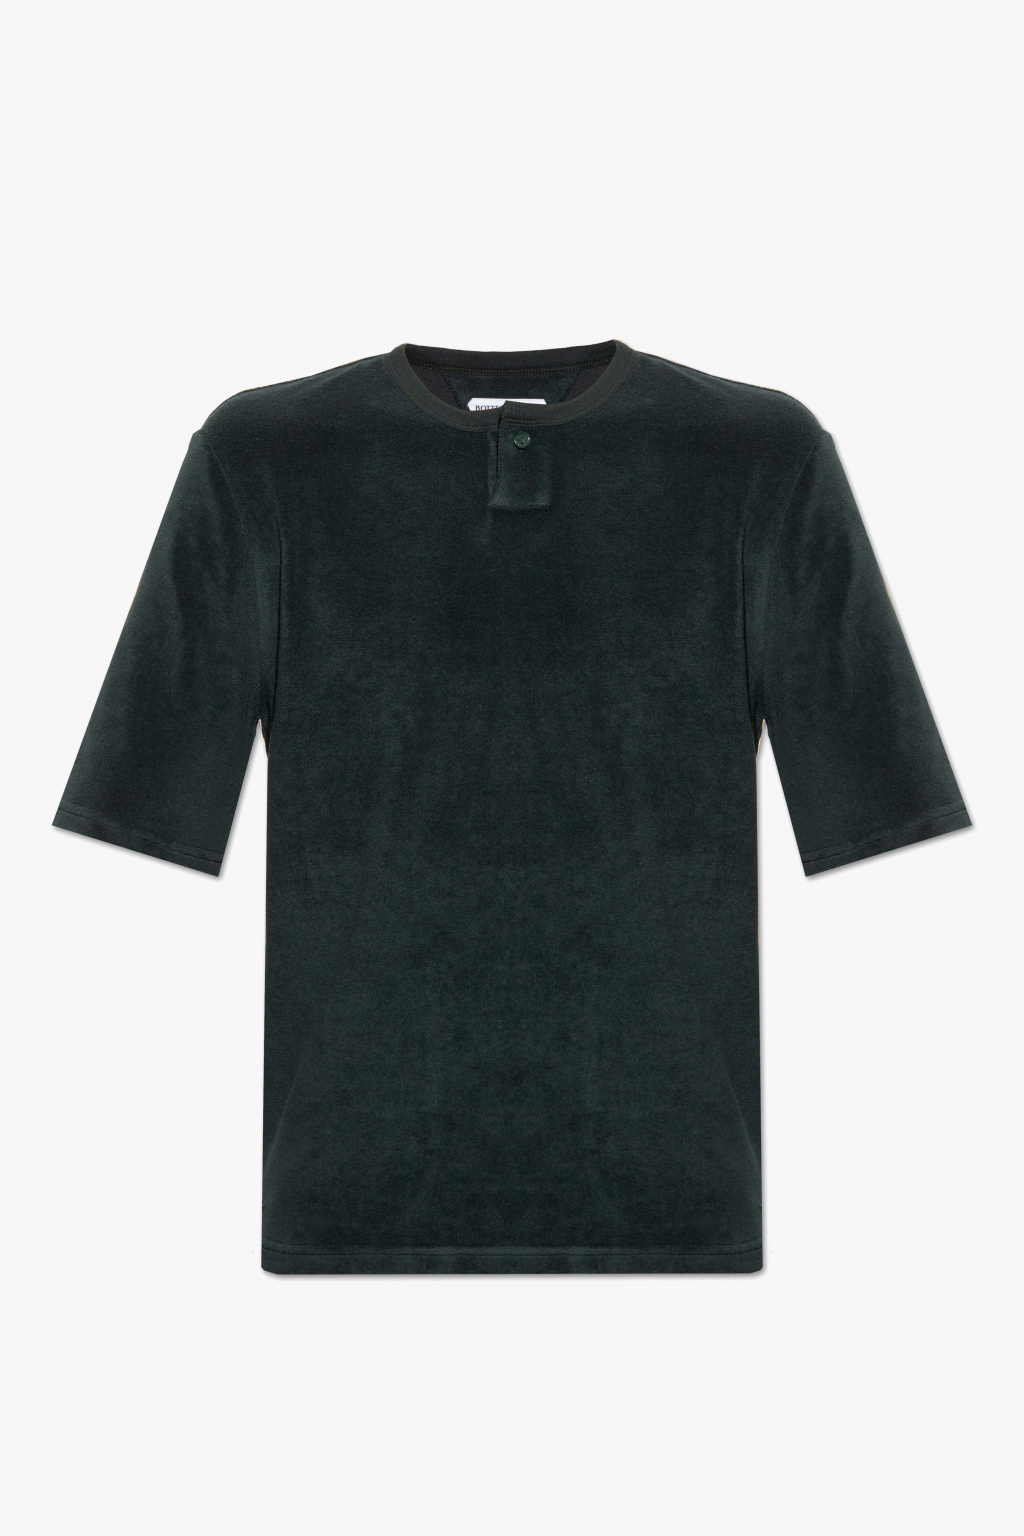 Bottega Veneta Textured T-shirt